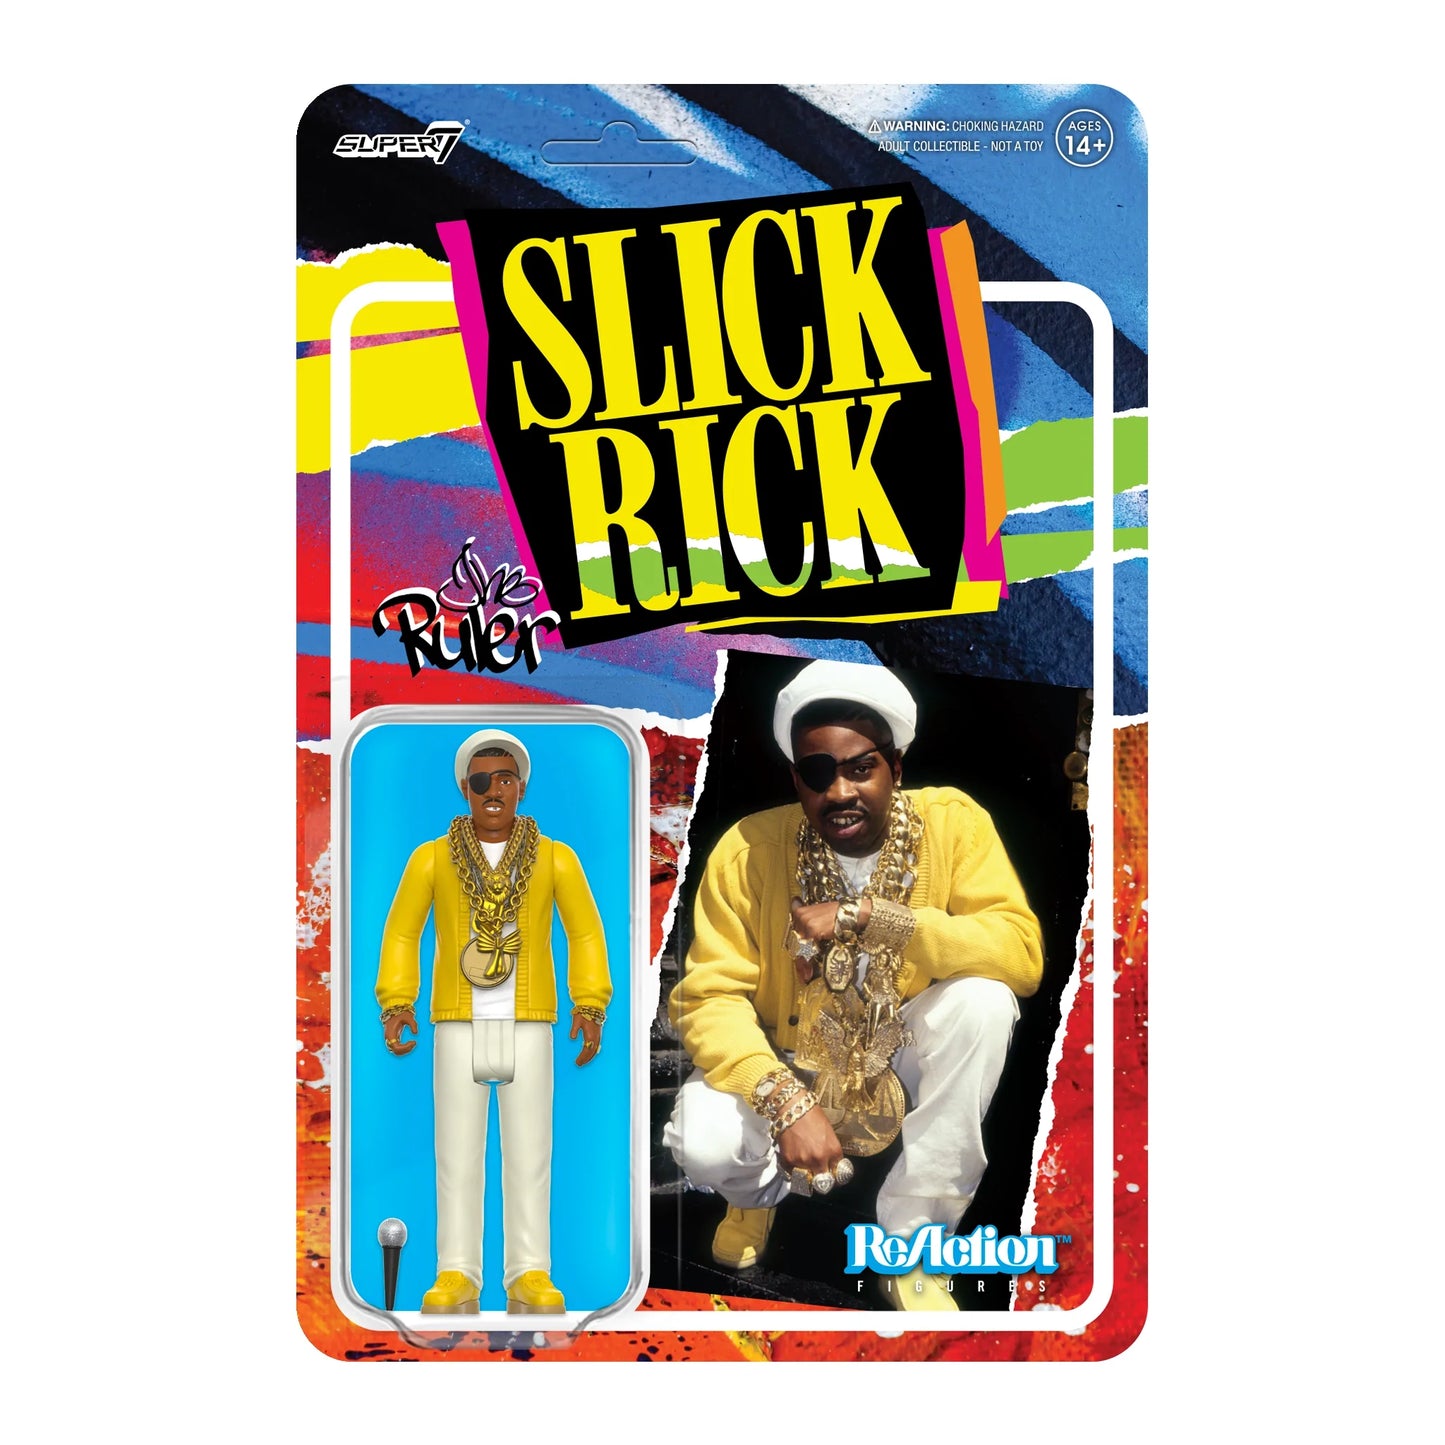 Slick Rick (The Ruler)